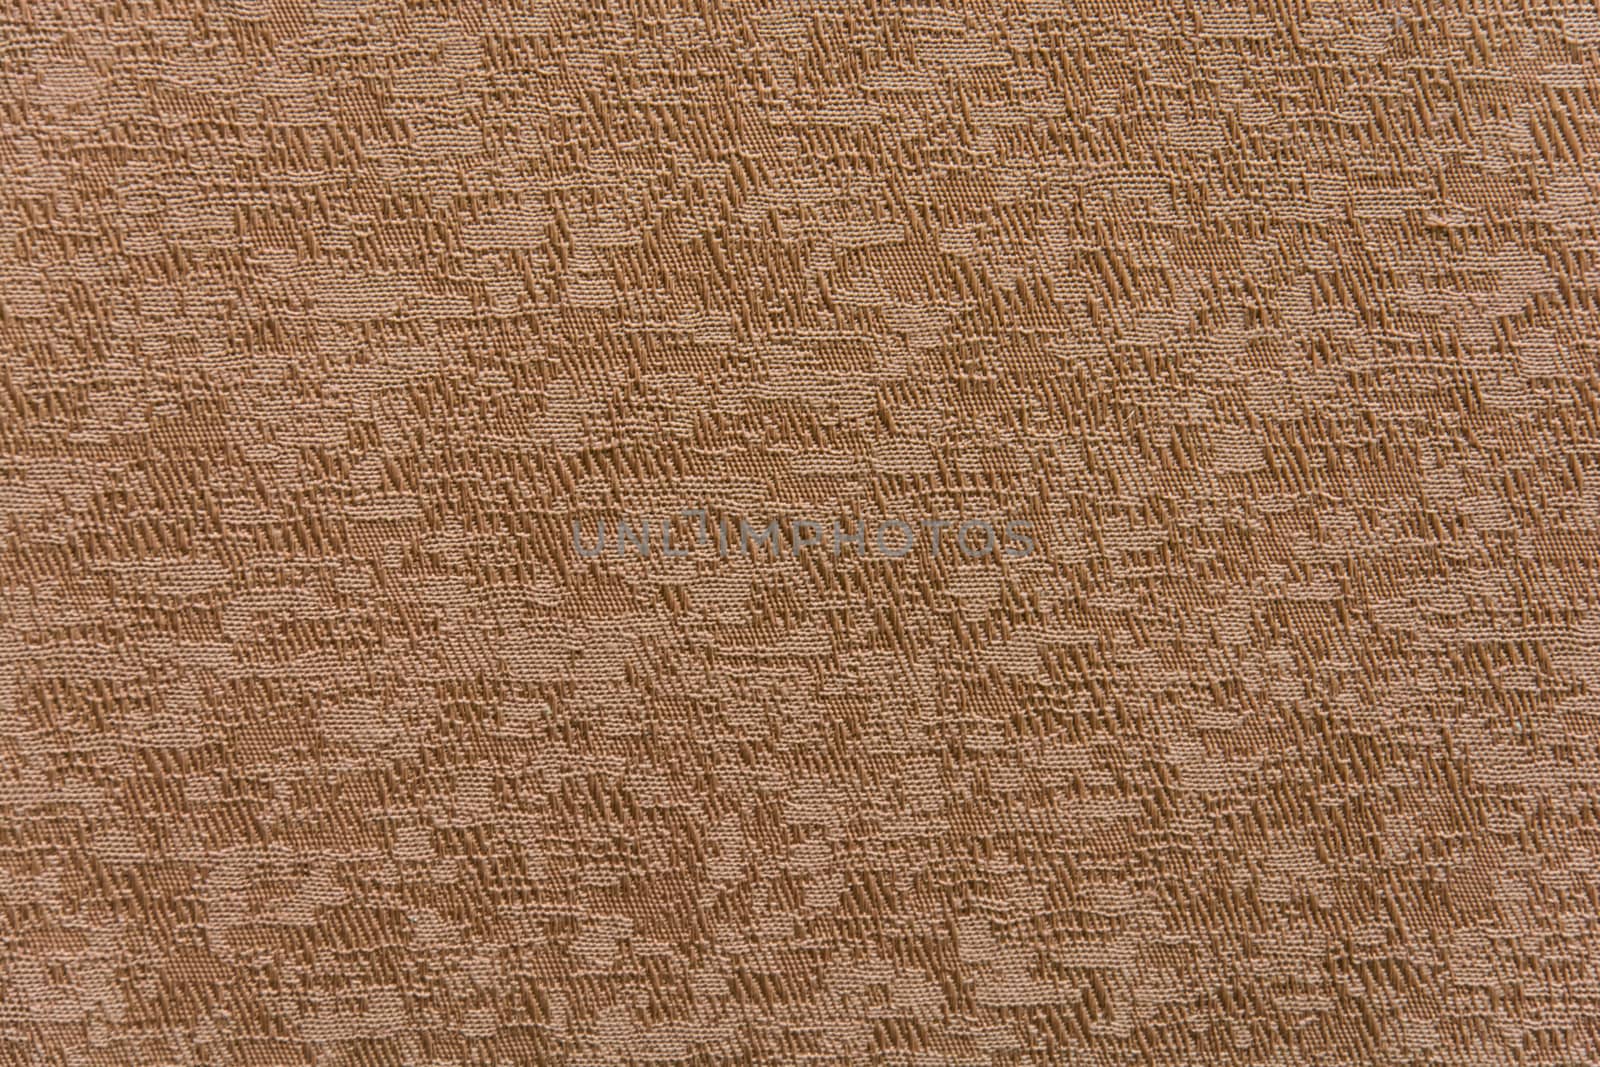 Texture of brown fabric by shutterbird